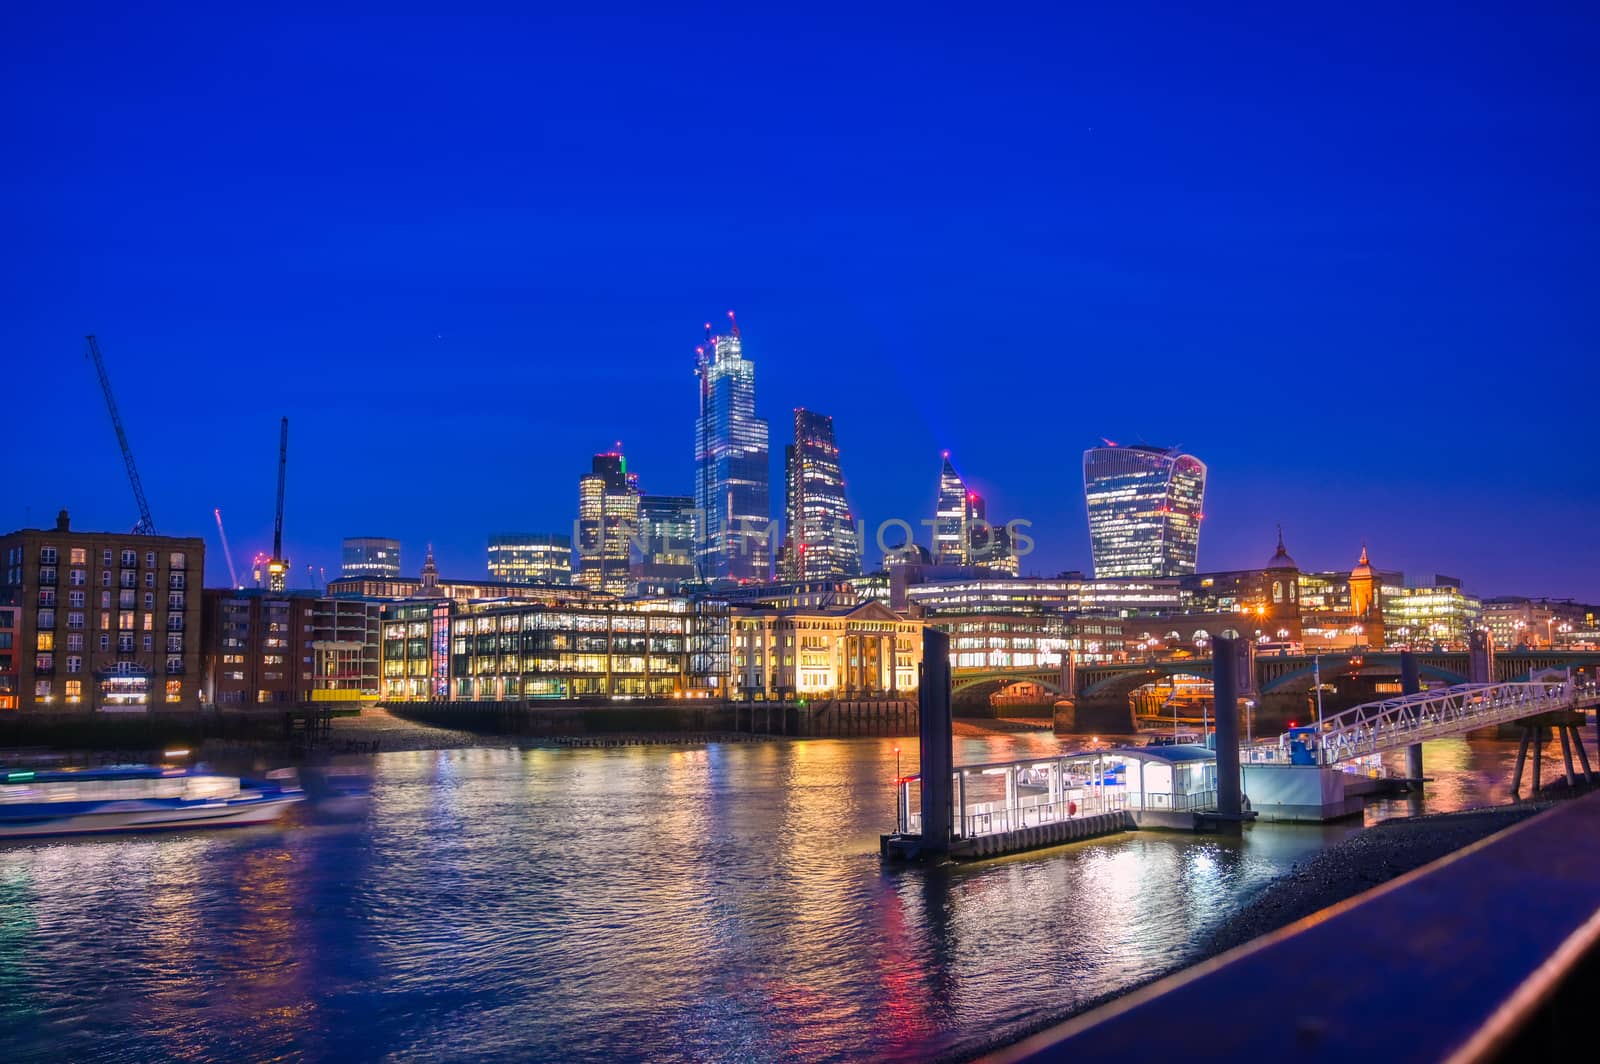 London skyline across the River Thames by jbyard22